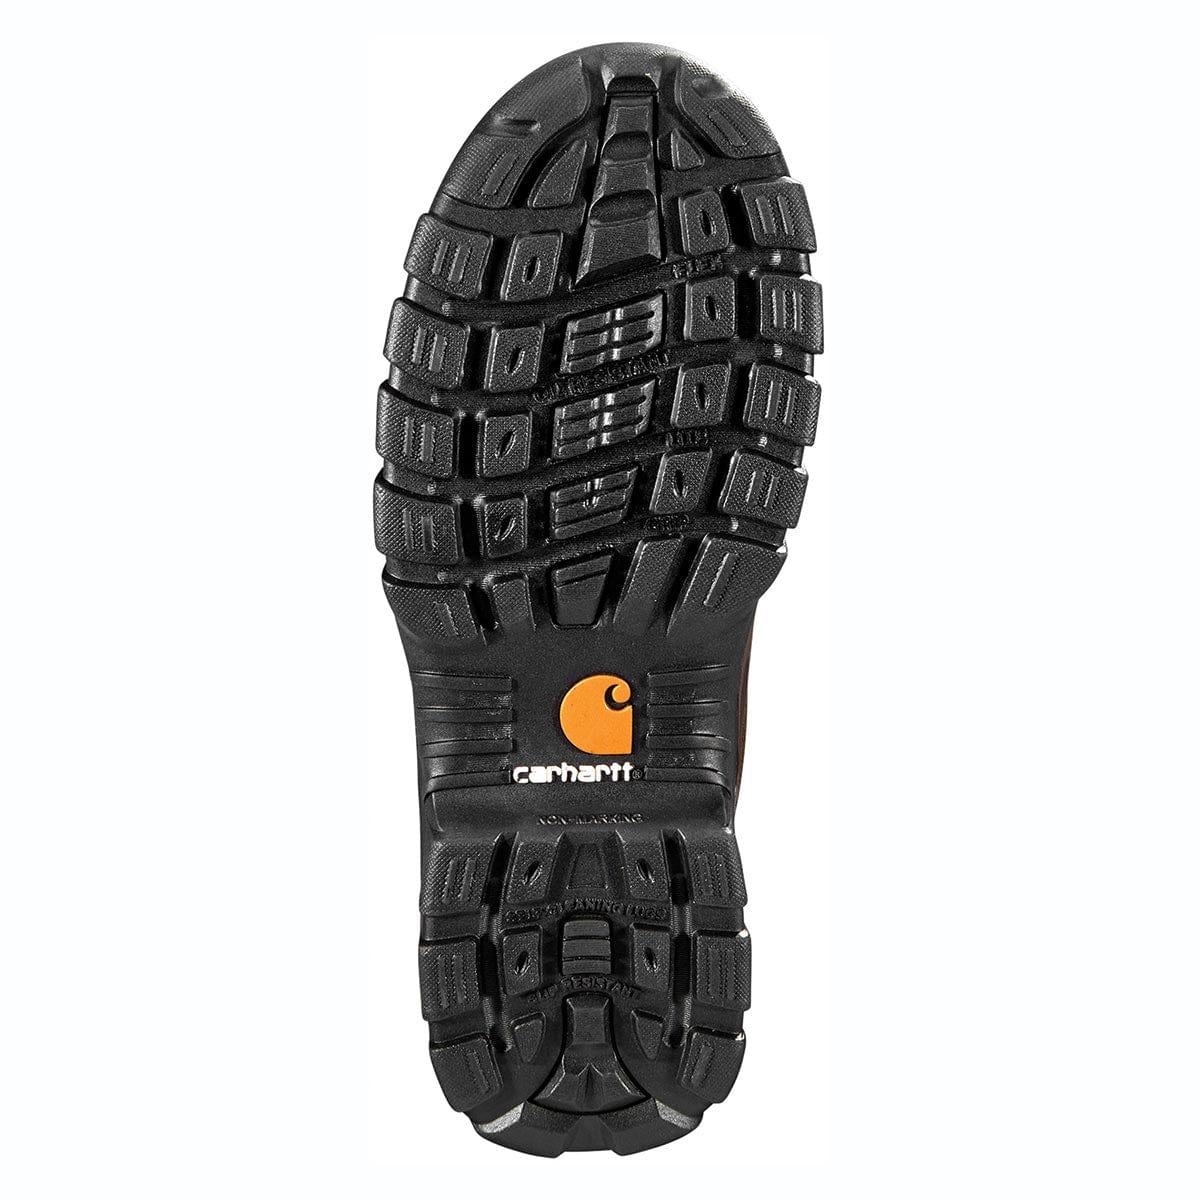 Carhartt Men's Rugged Flex 6" Waterproof Plain Toe Boot